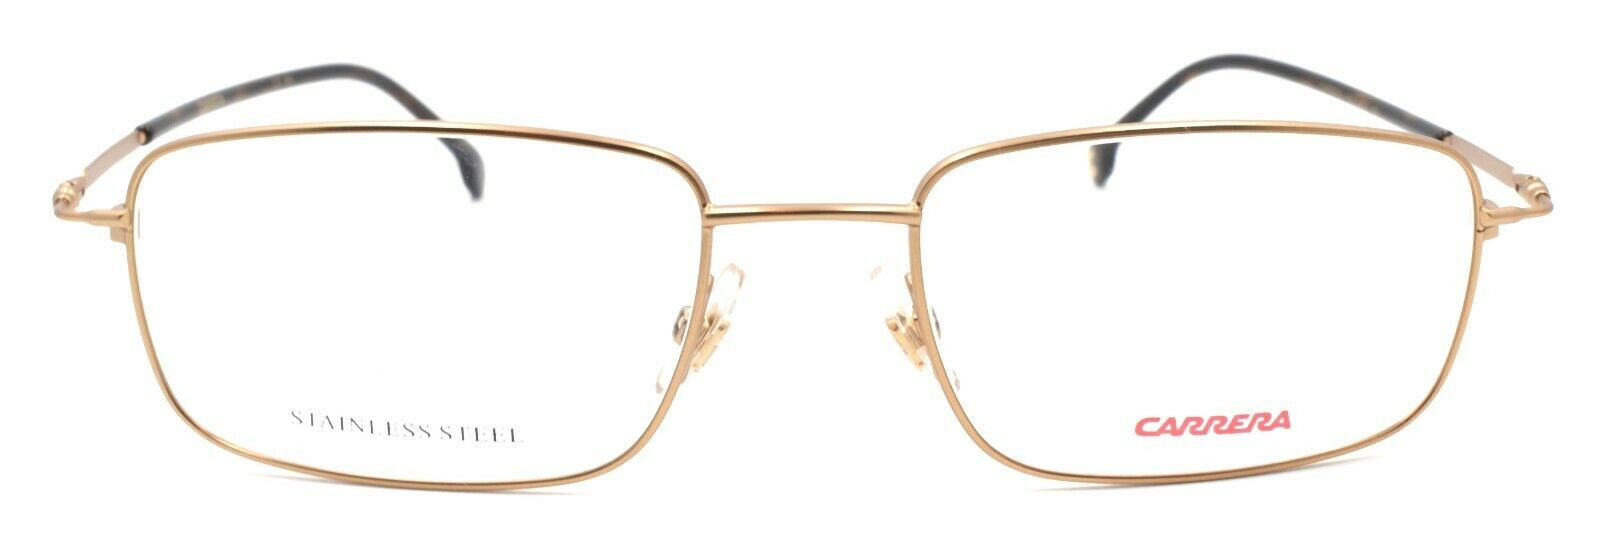 2-Carrera 146/V AOZ Men's Eyeglasses Frames 53-18-140 Semi-Matte Gold + CASE-762753066244-IKSpecs